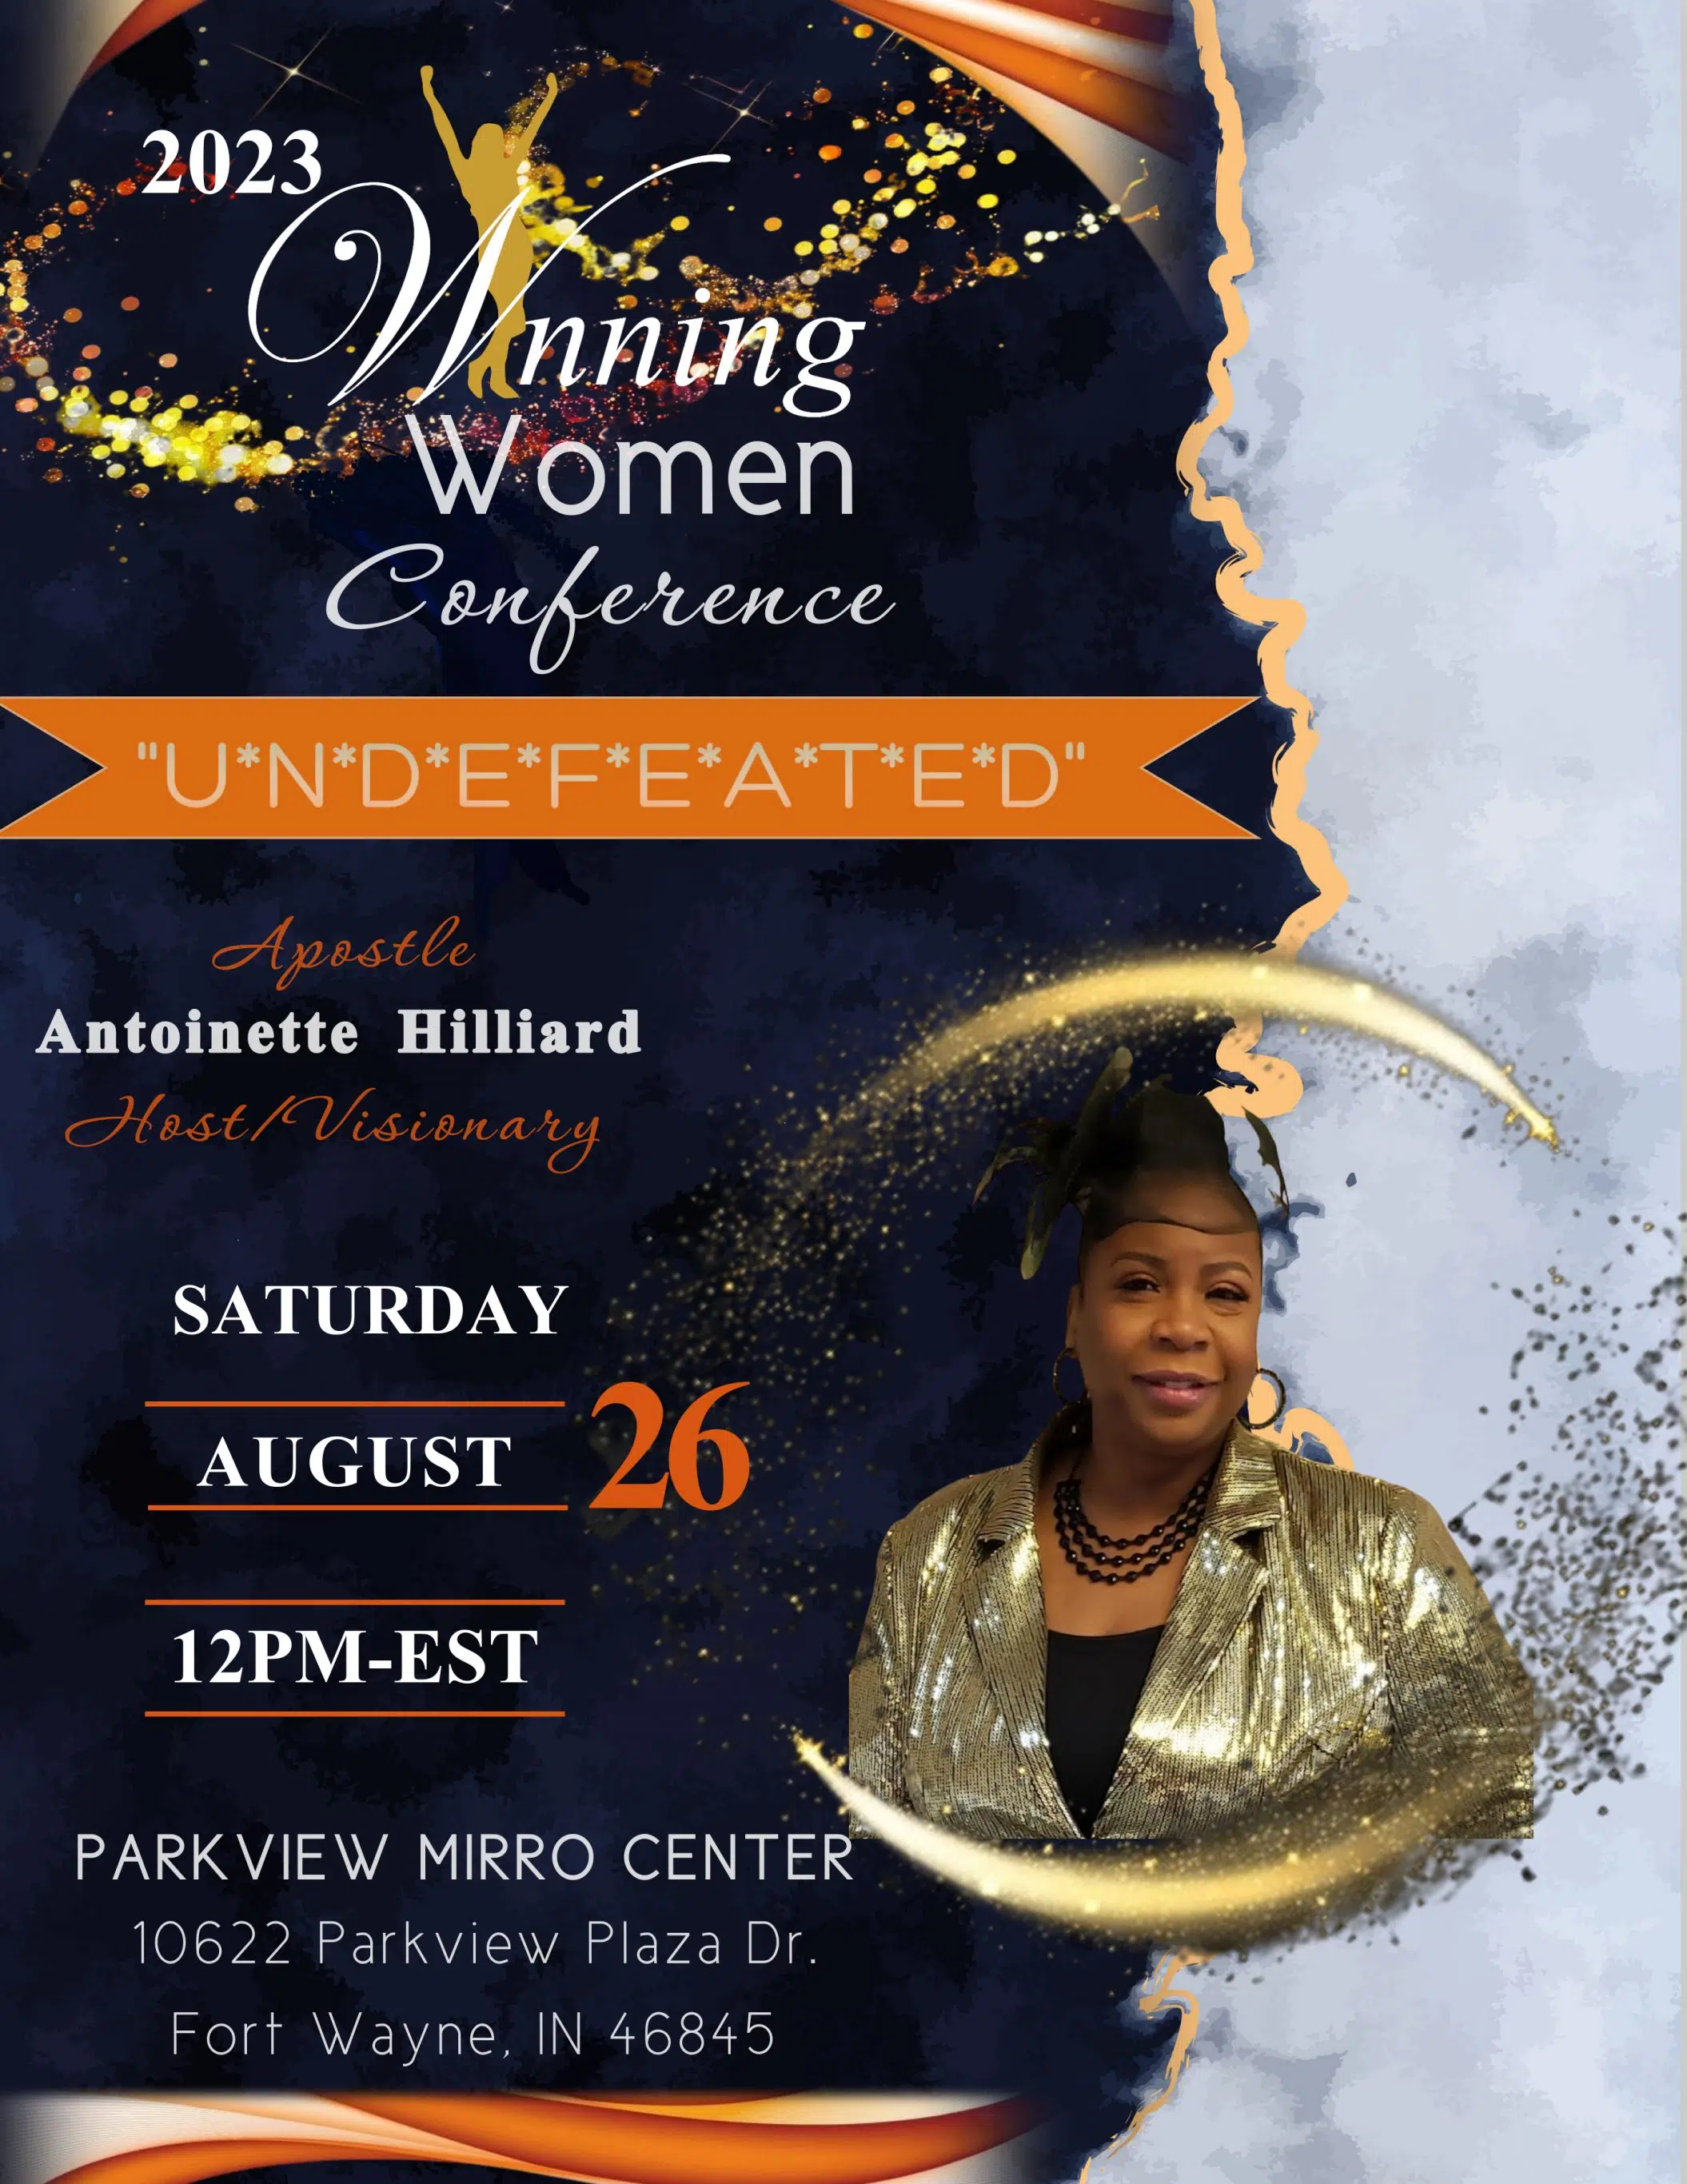 Antoinette Hilliard Winning Women Conference 2023